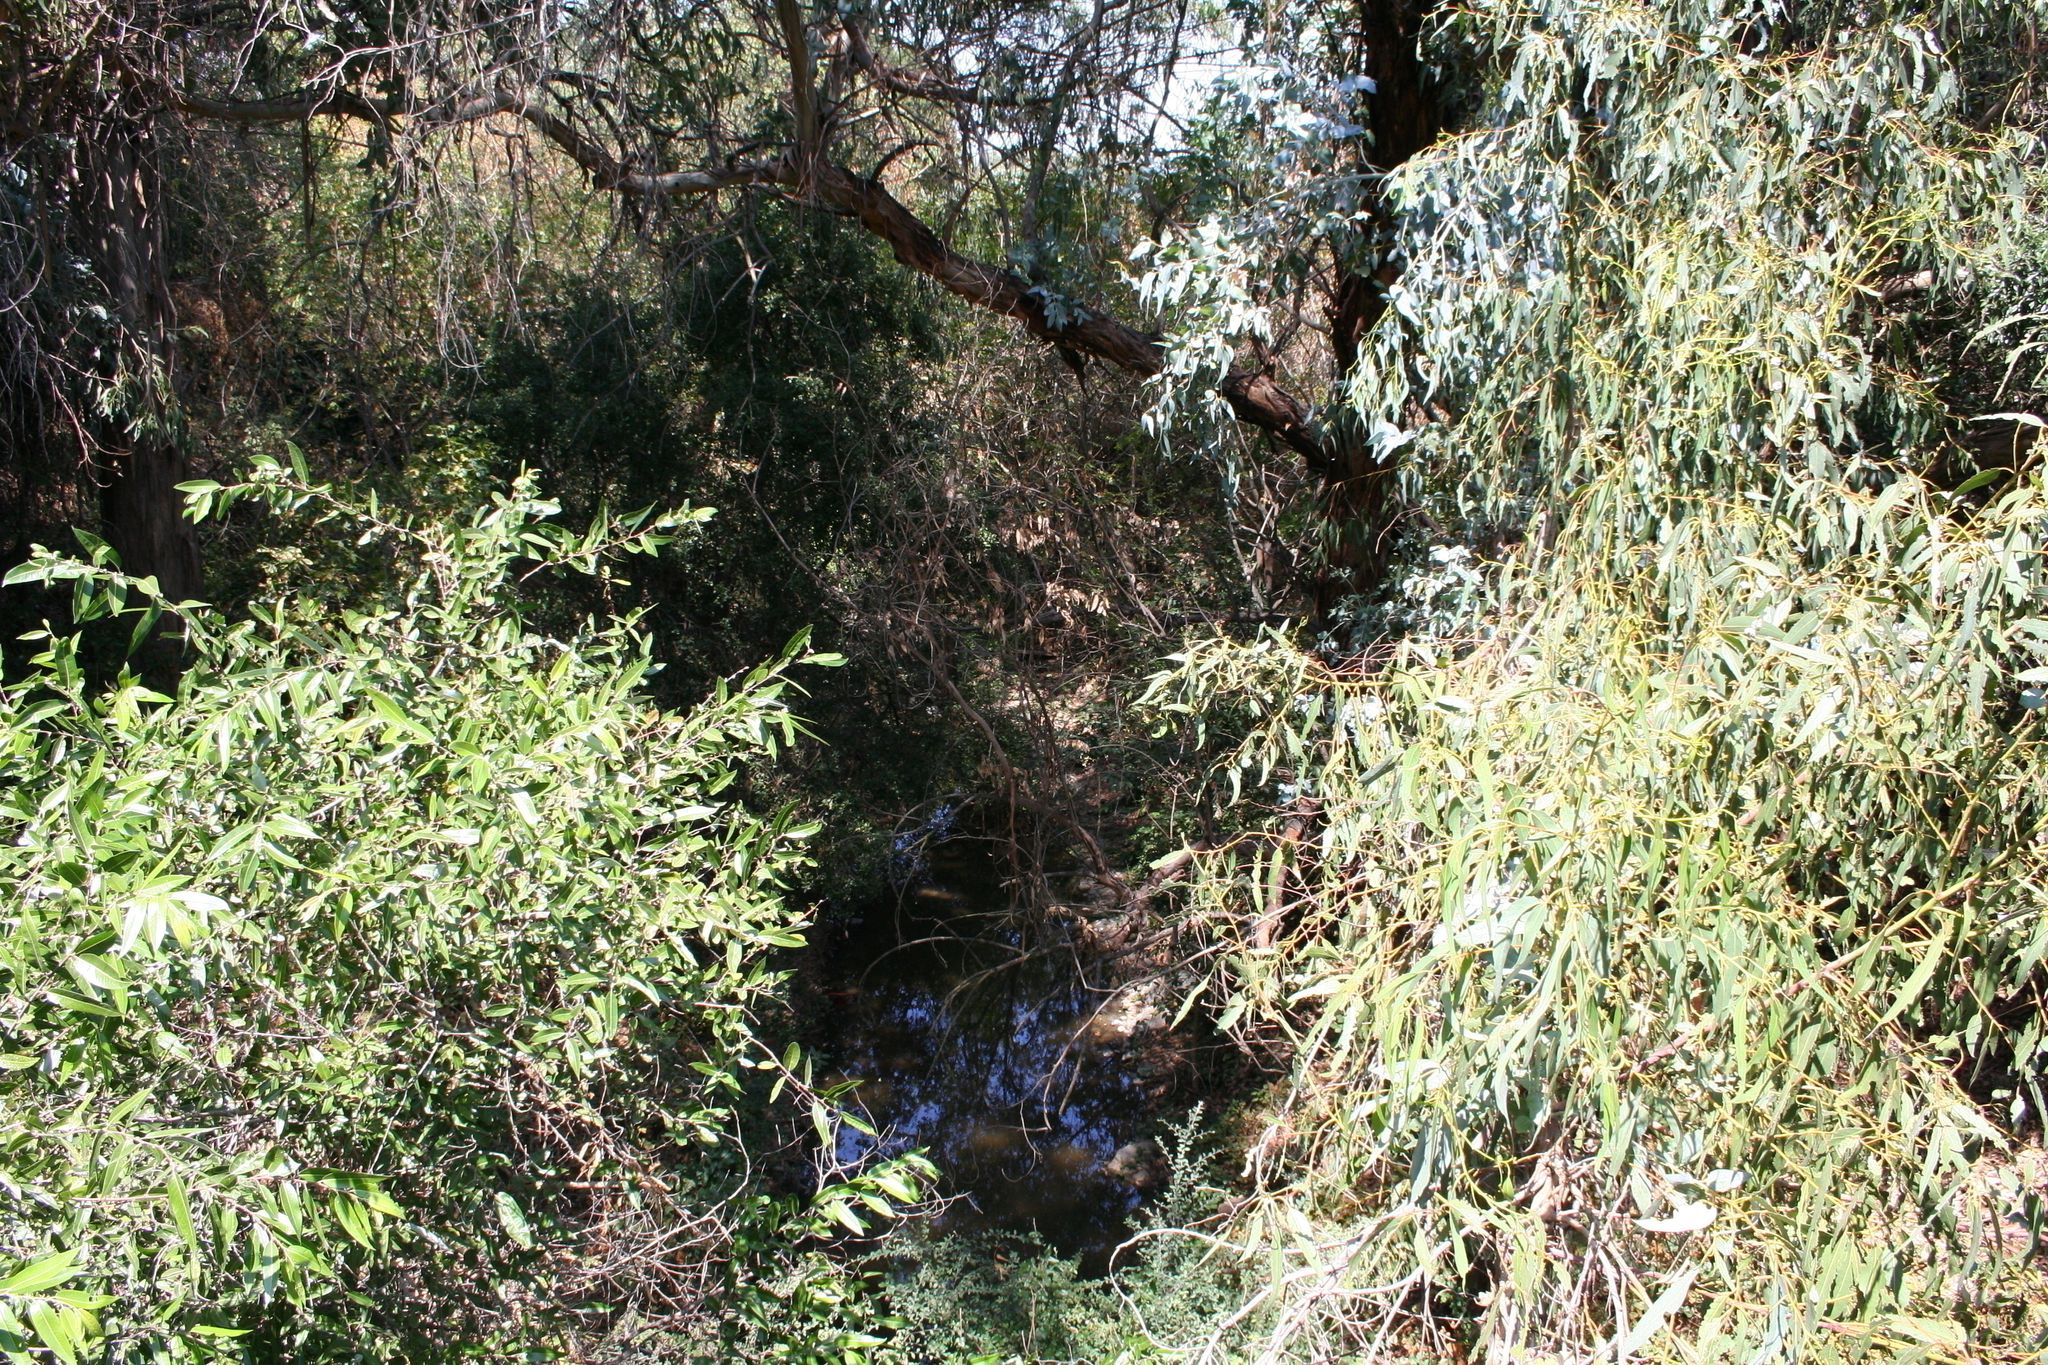 Stevens Creek downstream from the Sleeper Ave bridge has dense foliage.